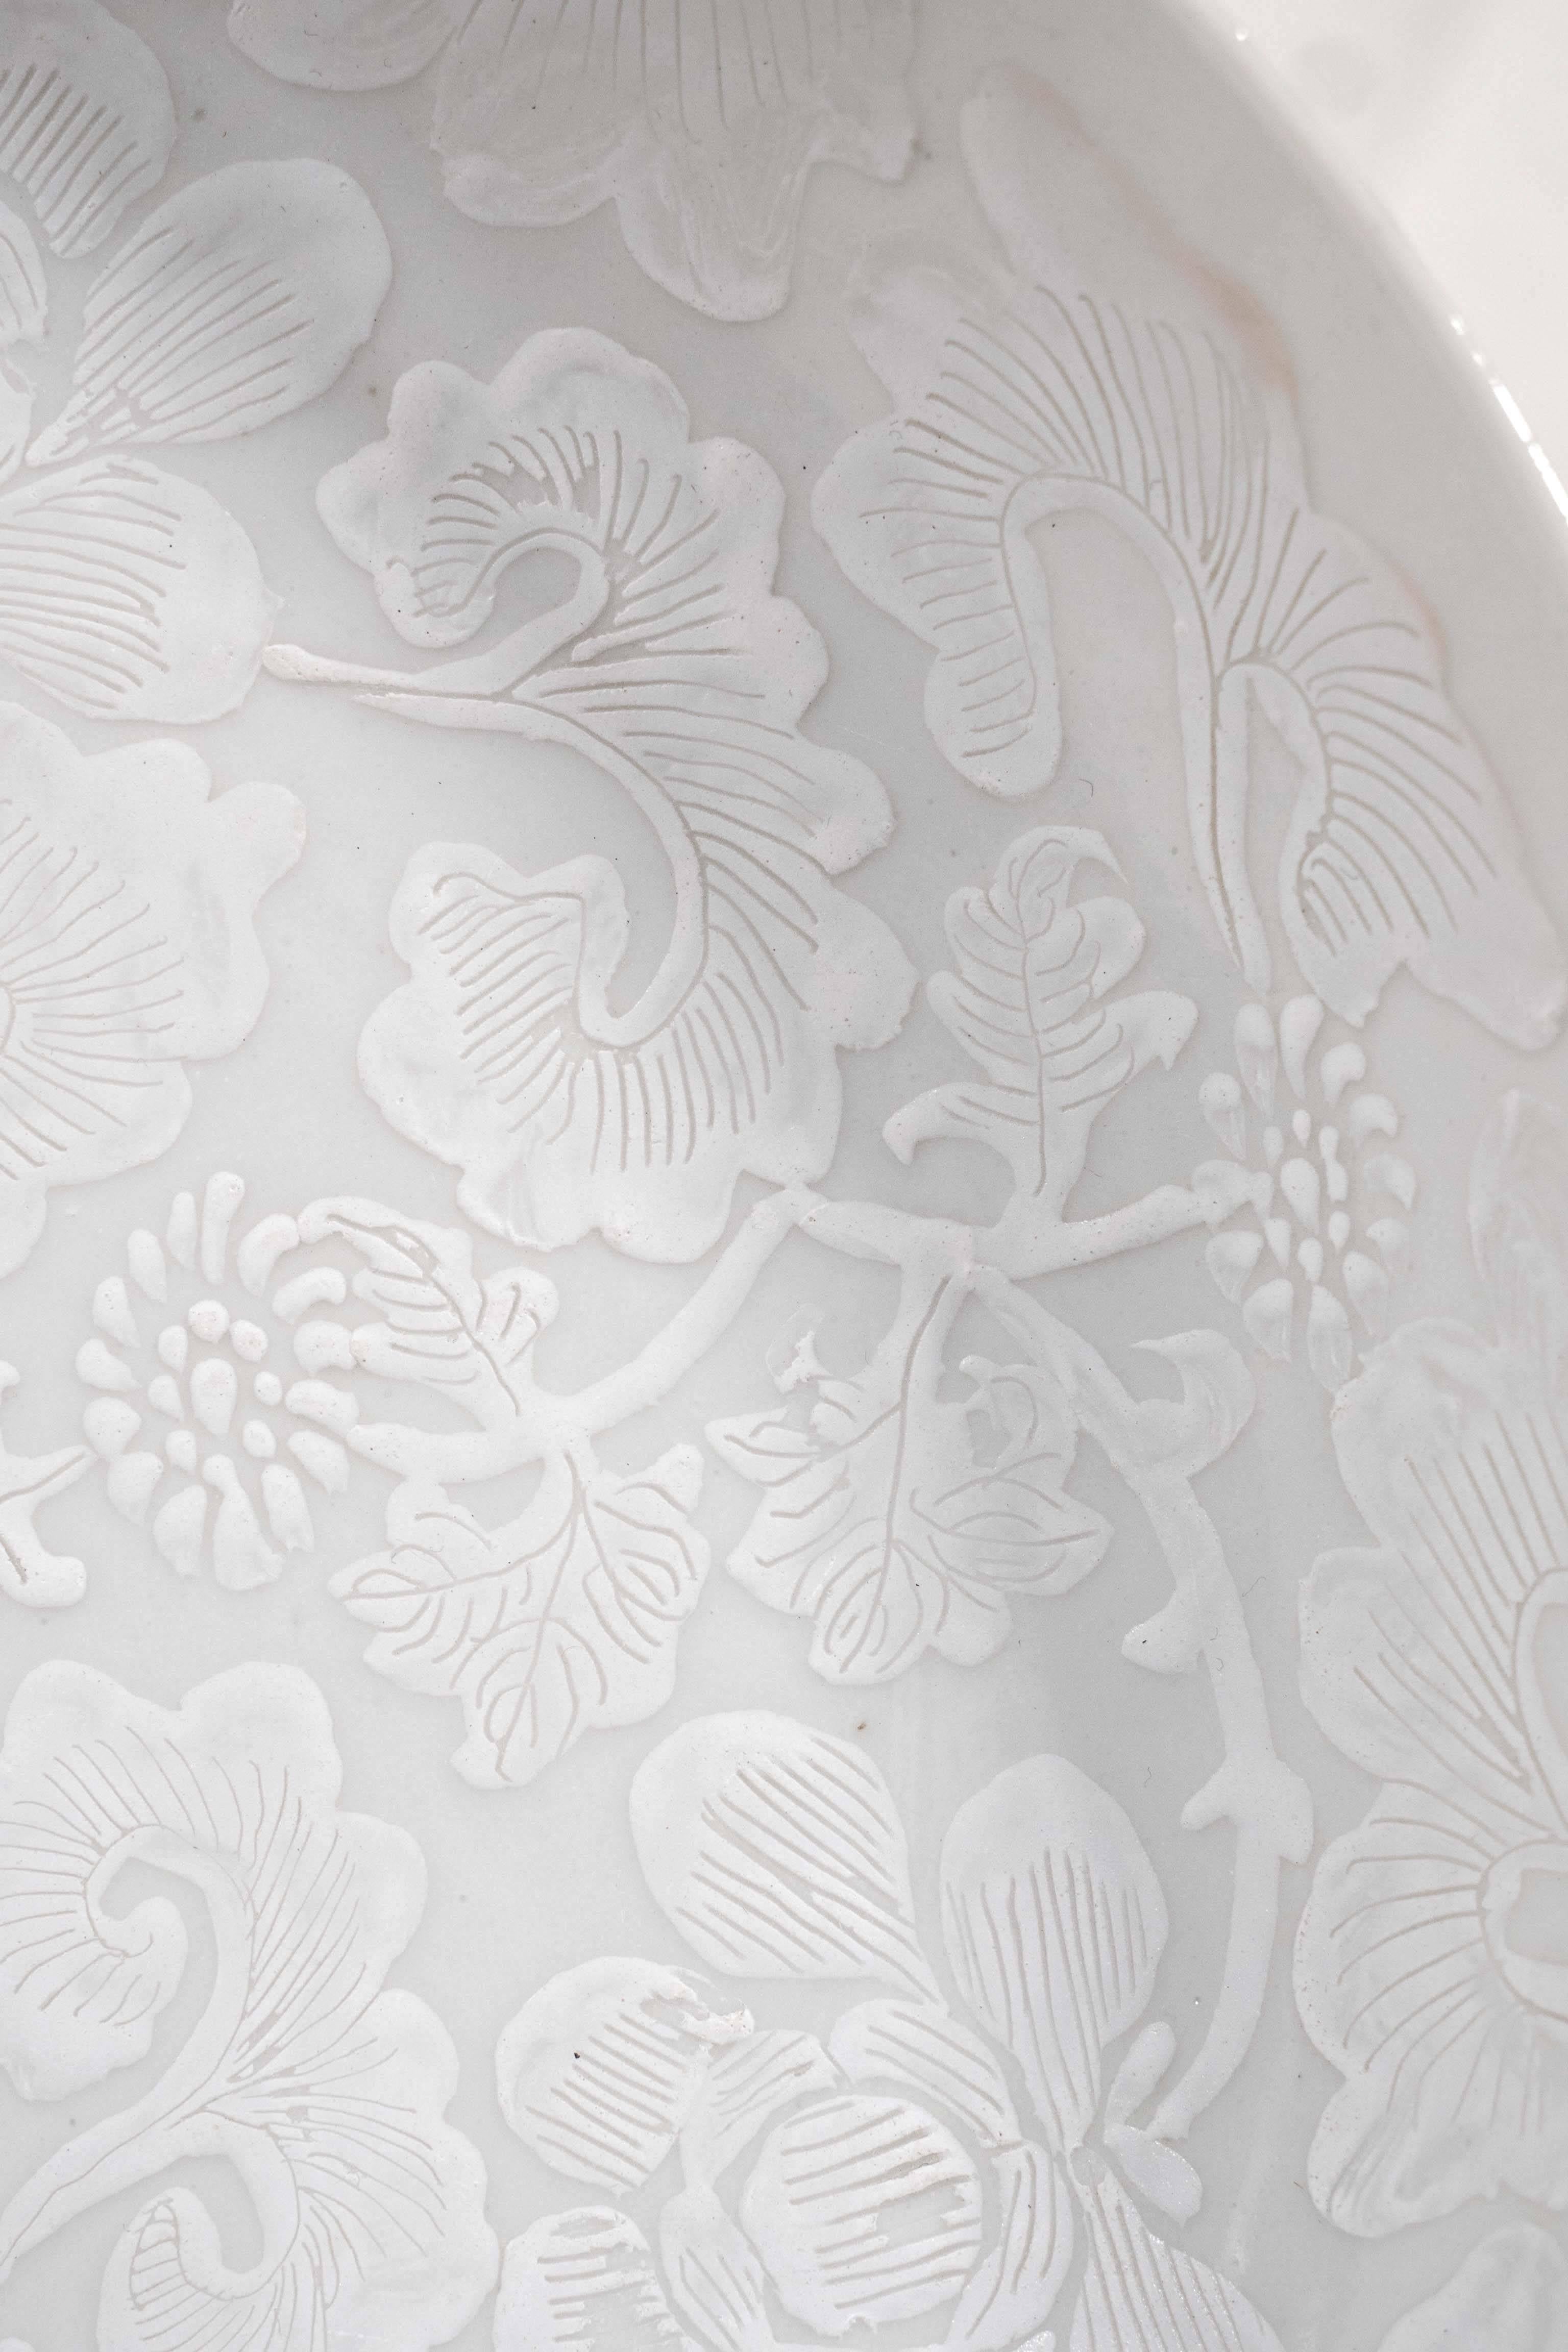  Chinese Export Porcelain Dish Painted Bianco Sopra Bianco 1